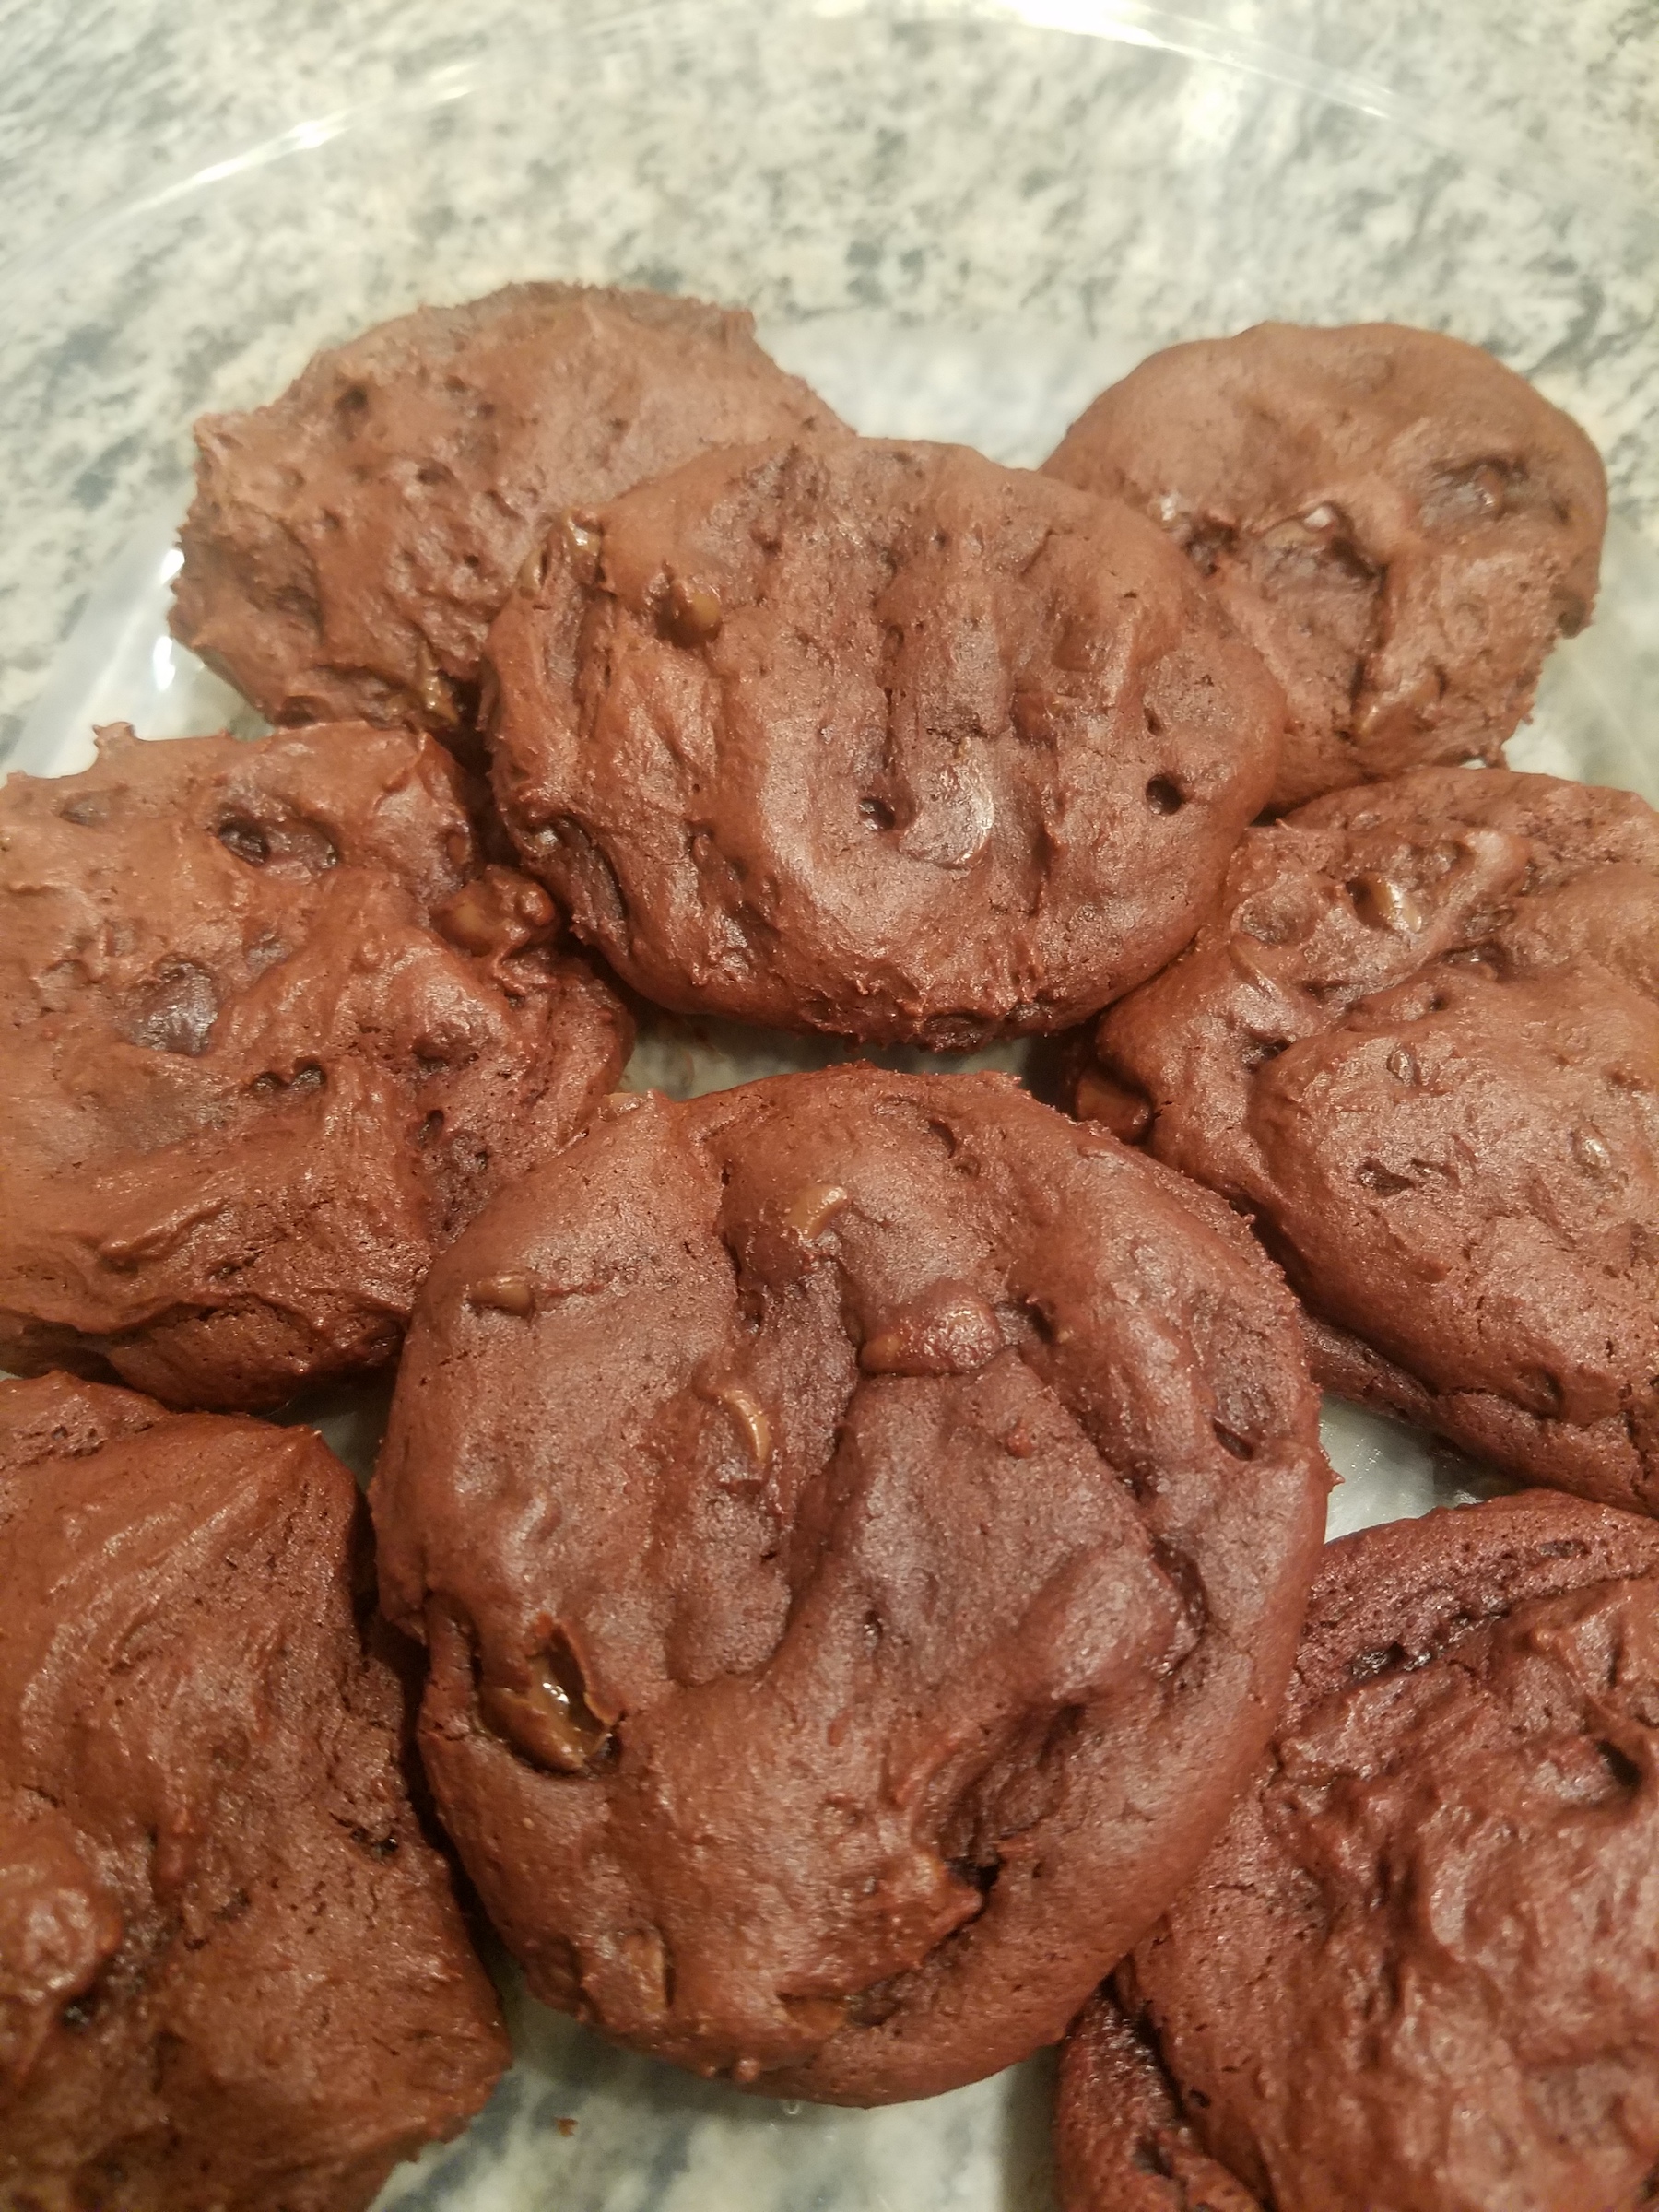 Red Velvet Chocolate Chip Cookies 